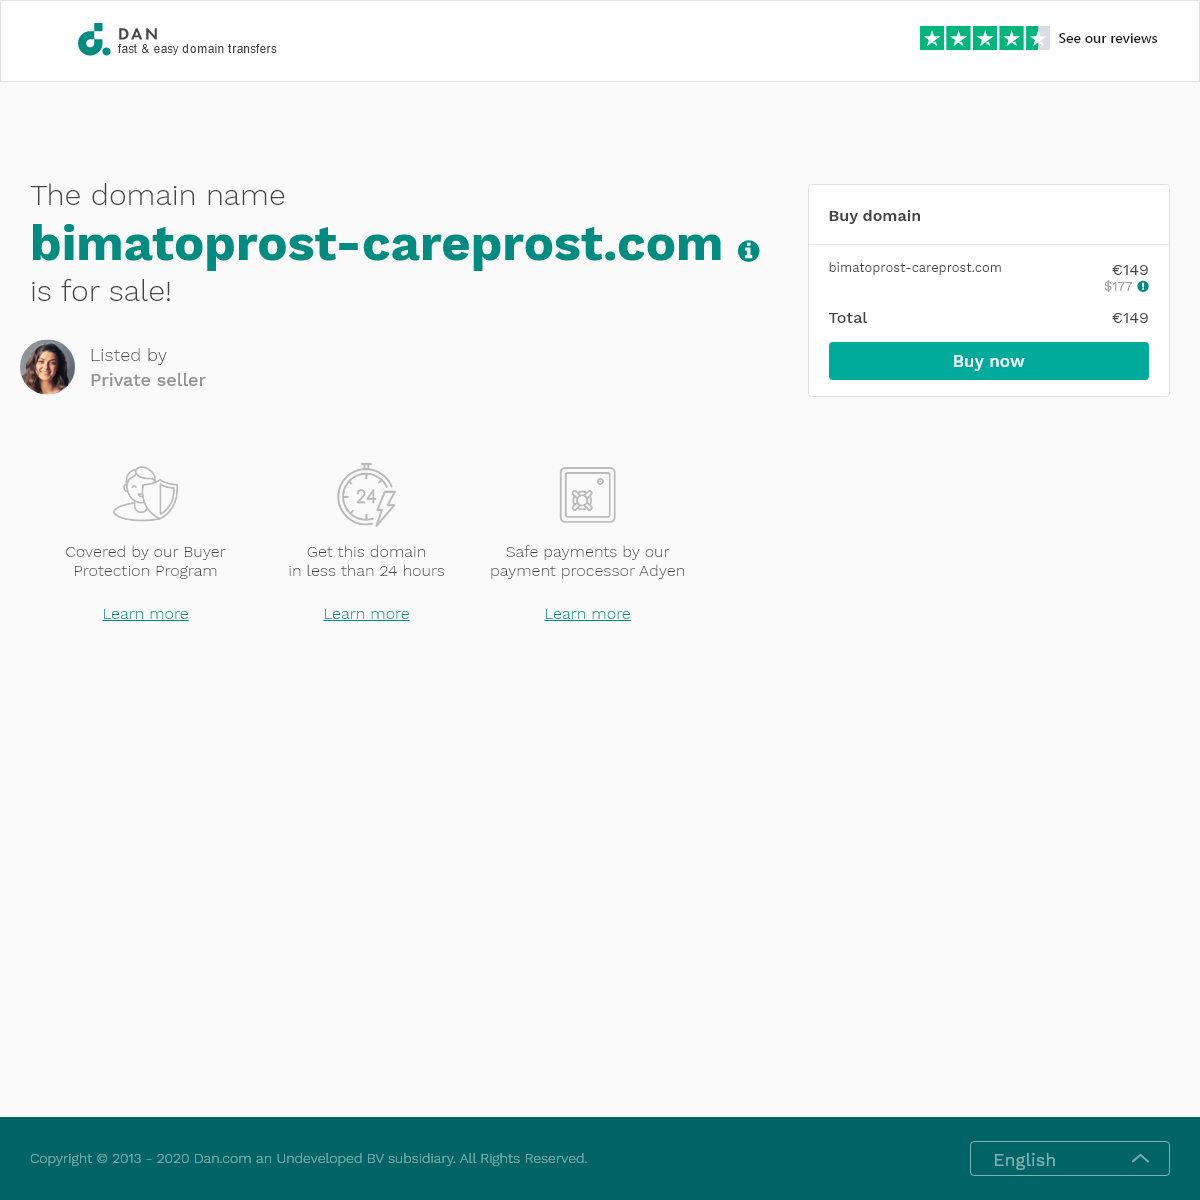 A complete backup of bimatoprost-careprost.com